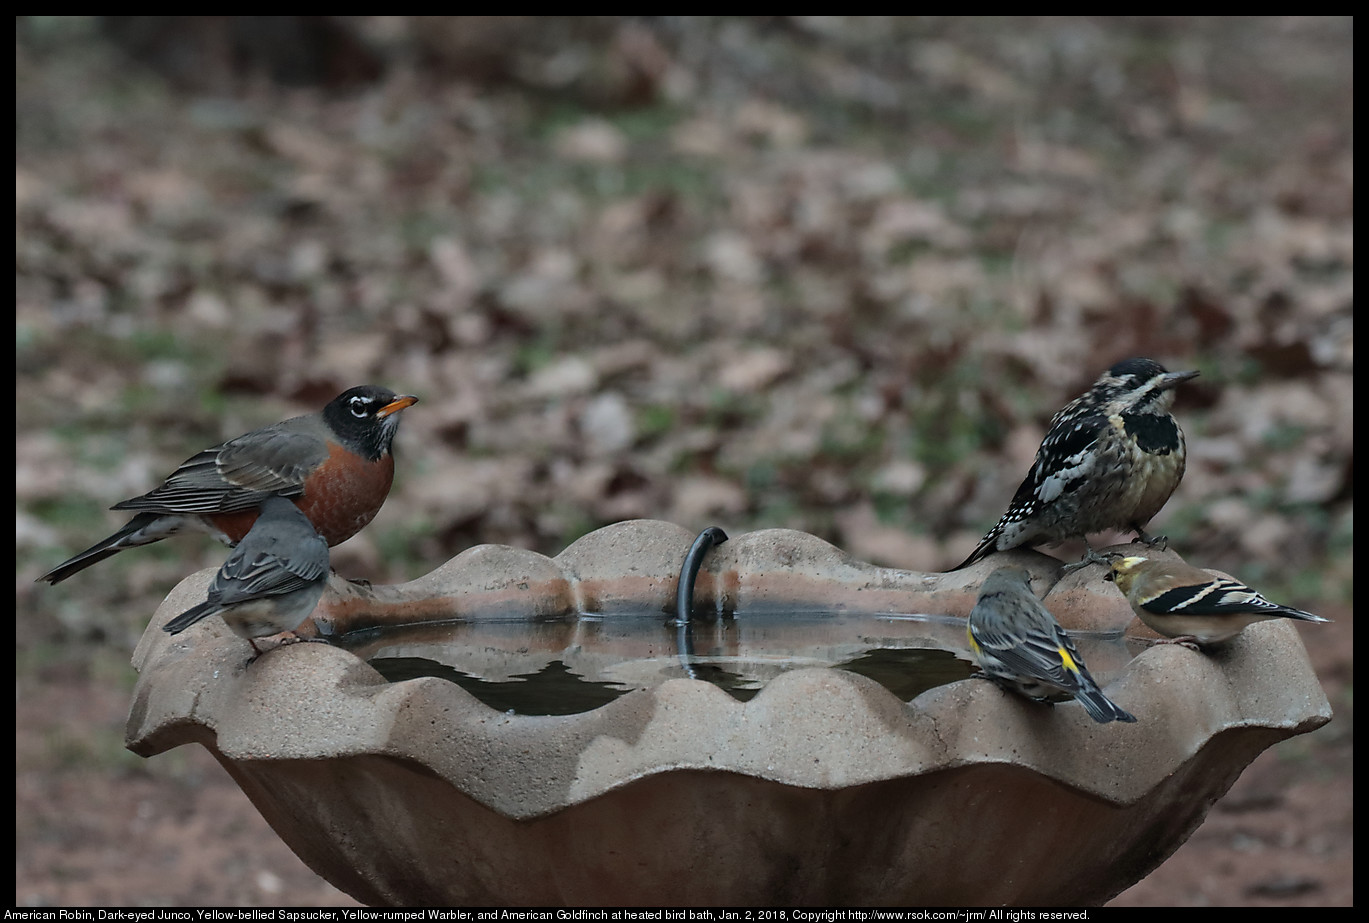 American Robin, Dark-eyed Junco, Yellow-bellied Sapsucker, Yellow-rumped Warbler, and American Goldfinch at heated bird bath, Jan. 2, 2018